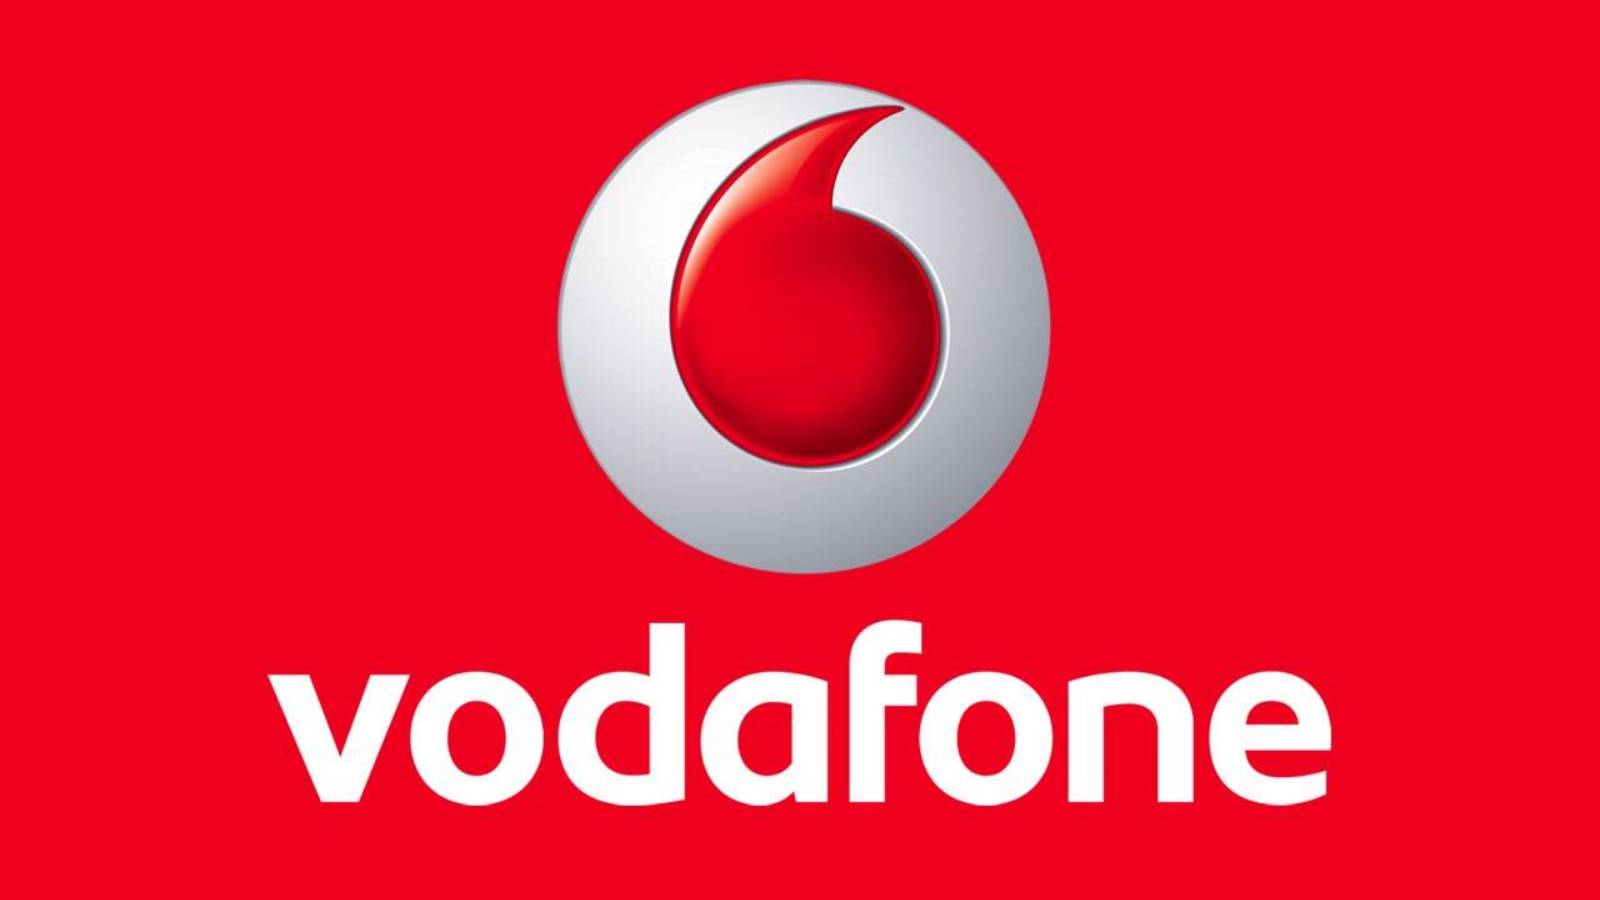 Vodafone trust